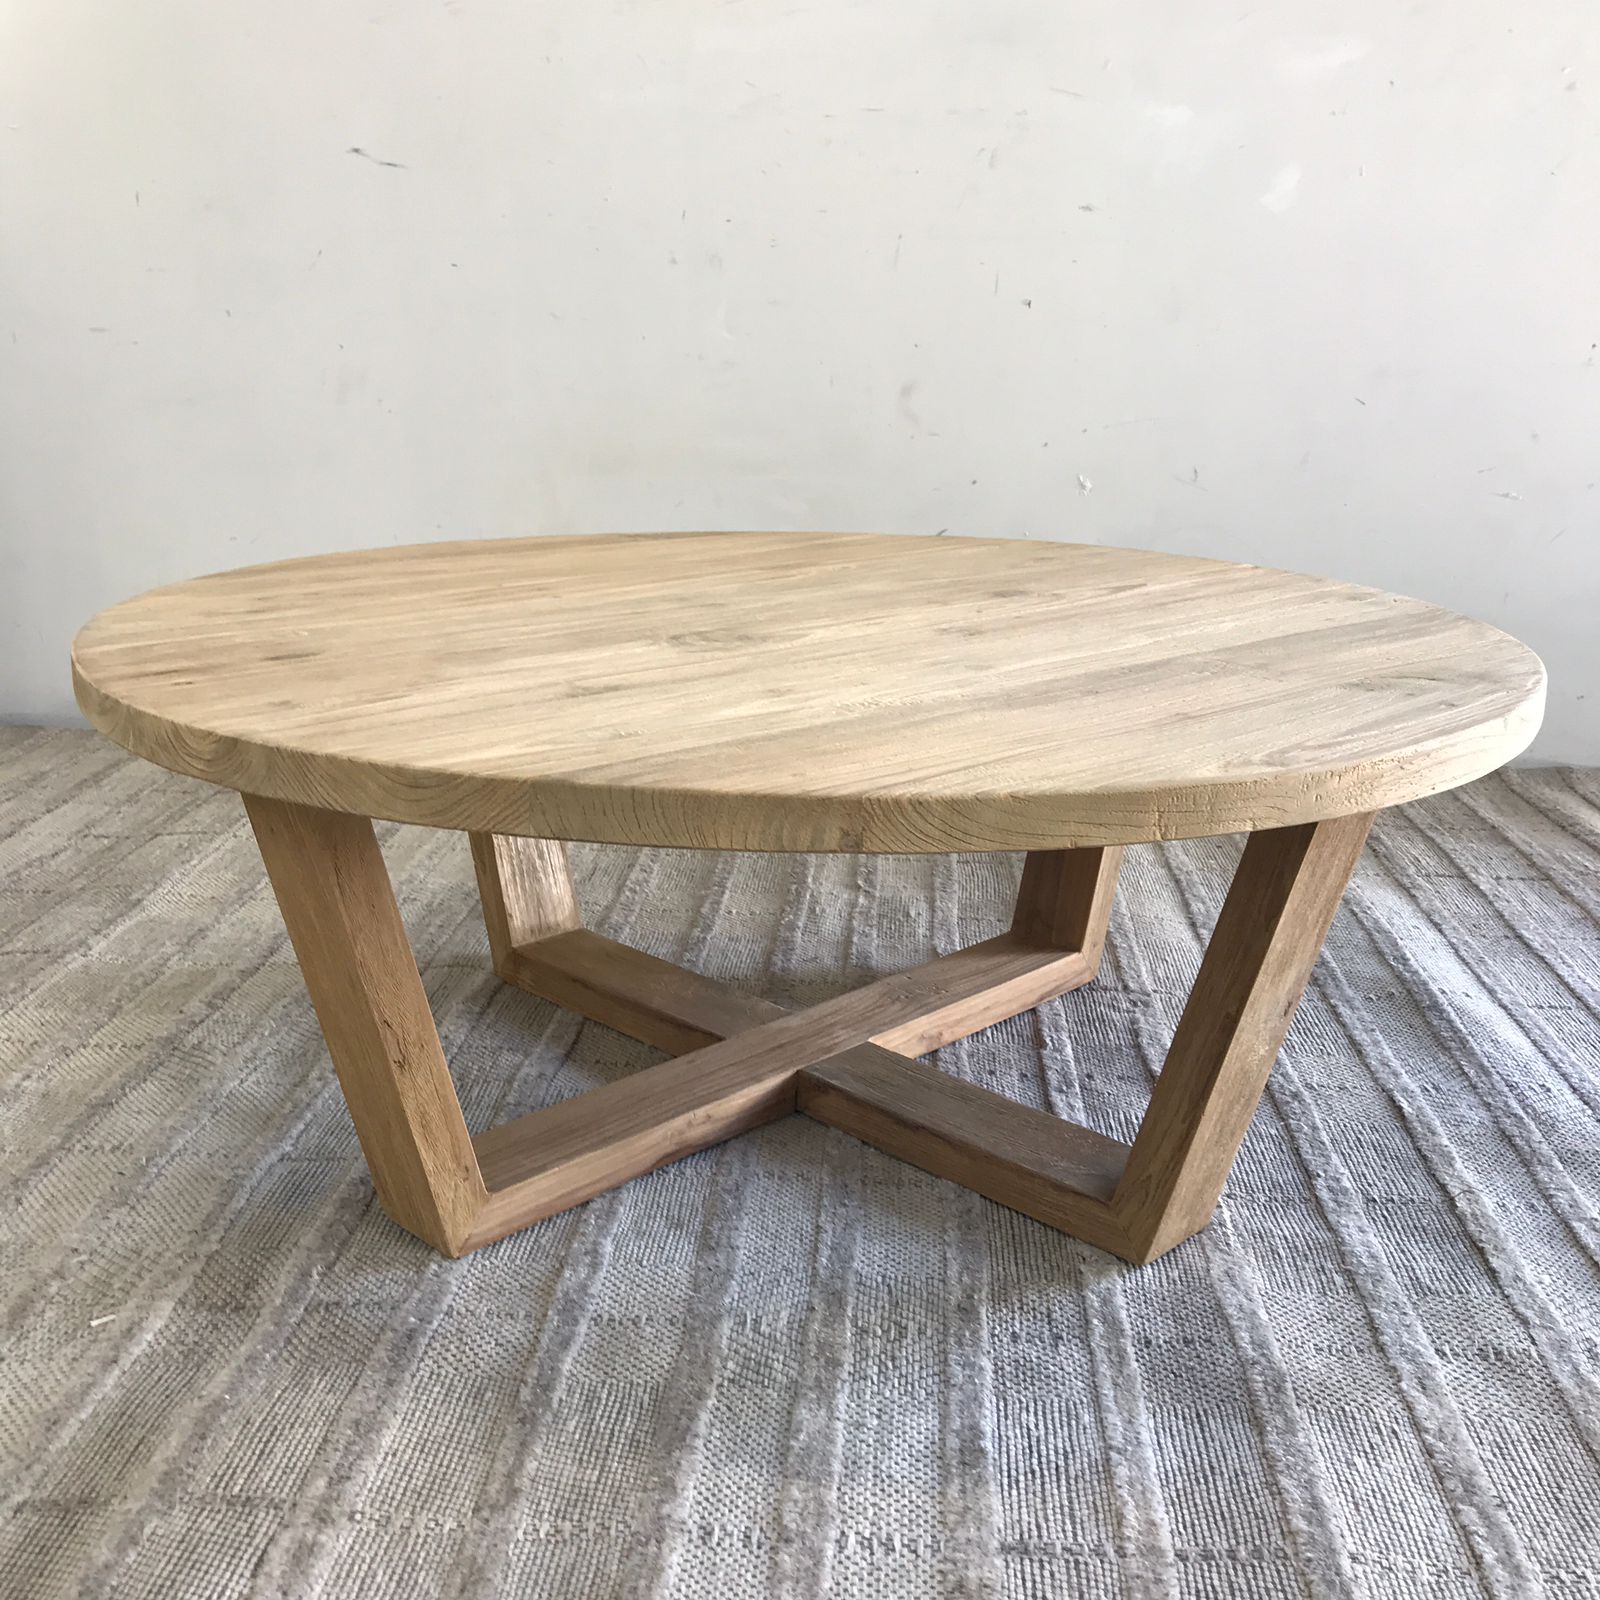 Wood Coffee Table 120cm